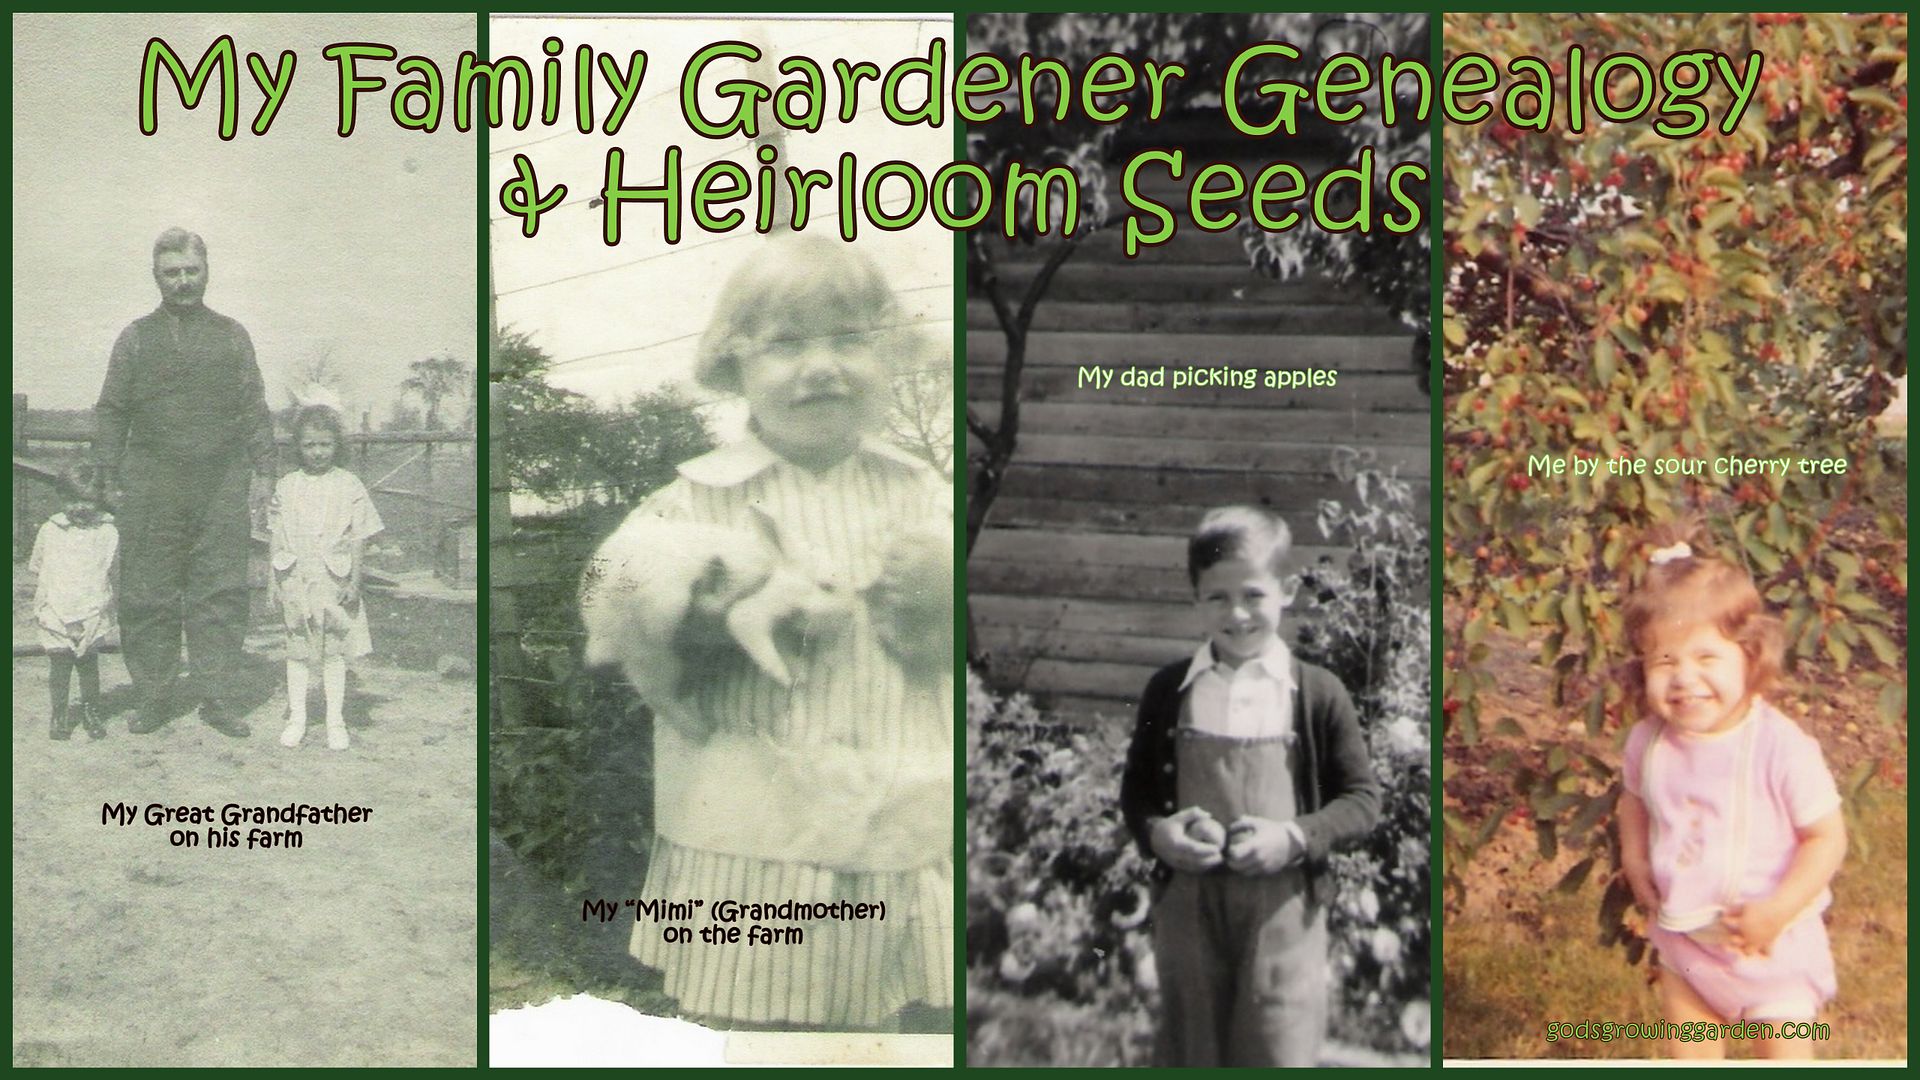 Gardener Genealogy by Angie OuelletteTower for godsgrowinggarden.com photo OldPhotosMe_zps6e392fc0.jpg